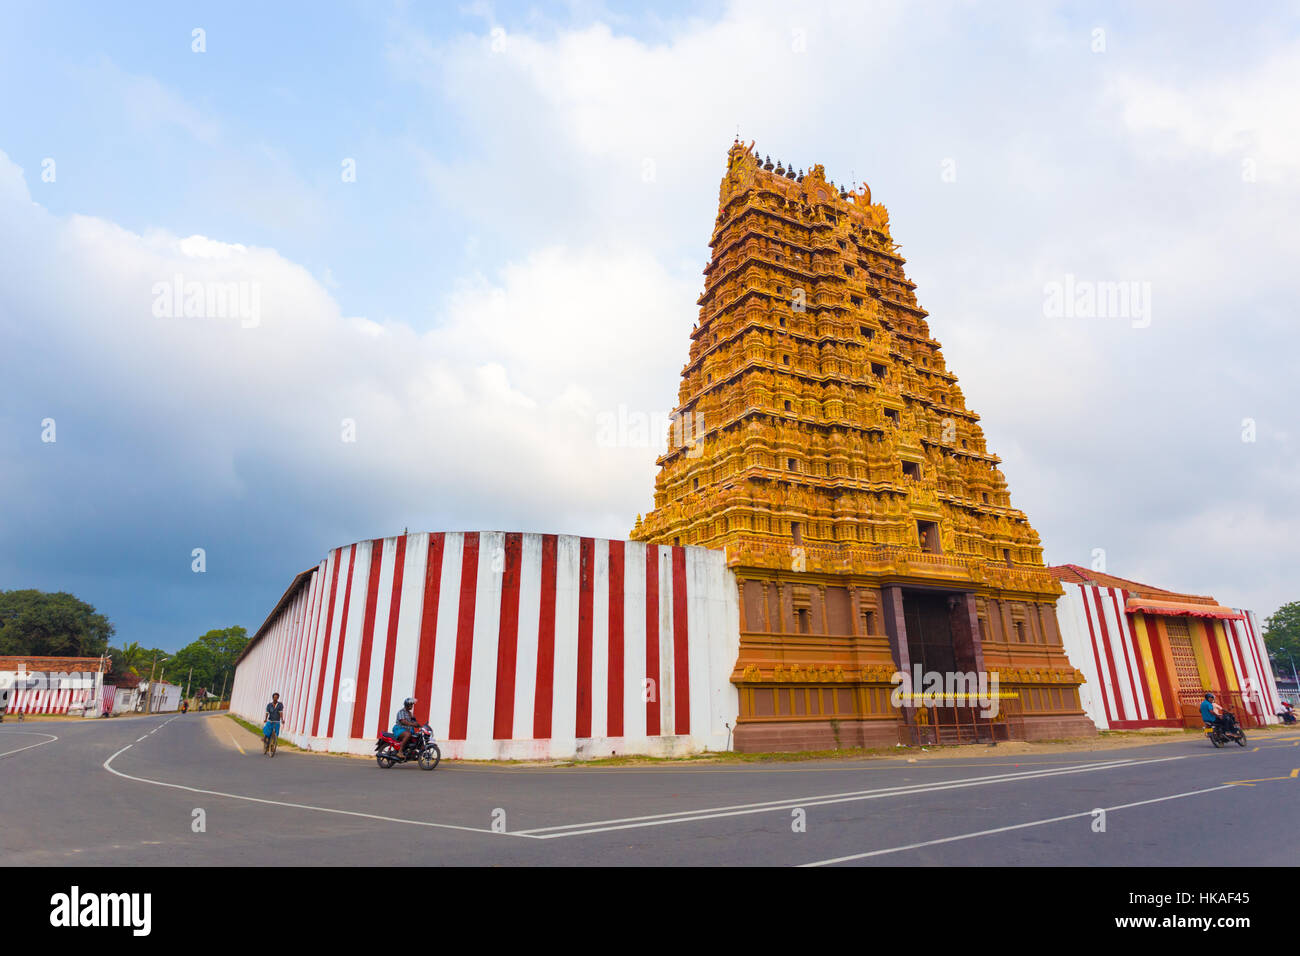 Sri Lankan people on the road in front of Golden Entrance gopuram tower, Swarna Vaasal, in Kandaswamy Kovil Temple in Nallur Stock Photo